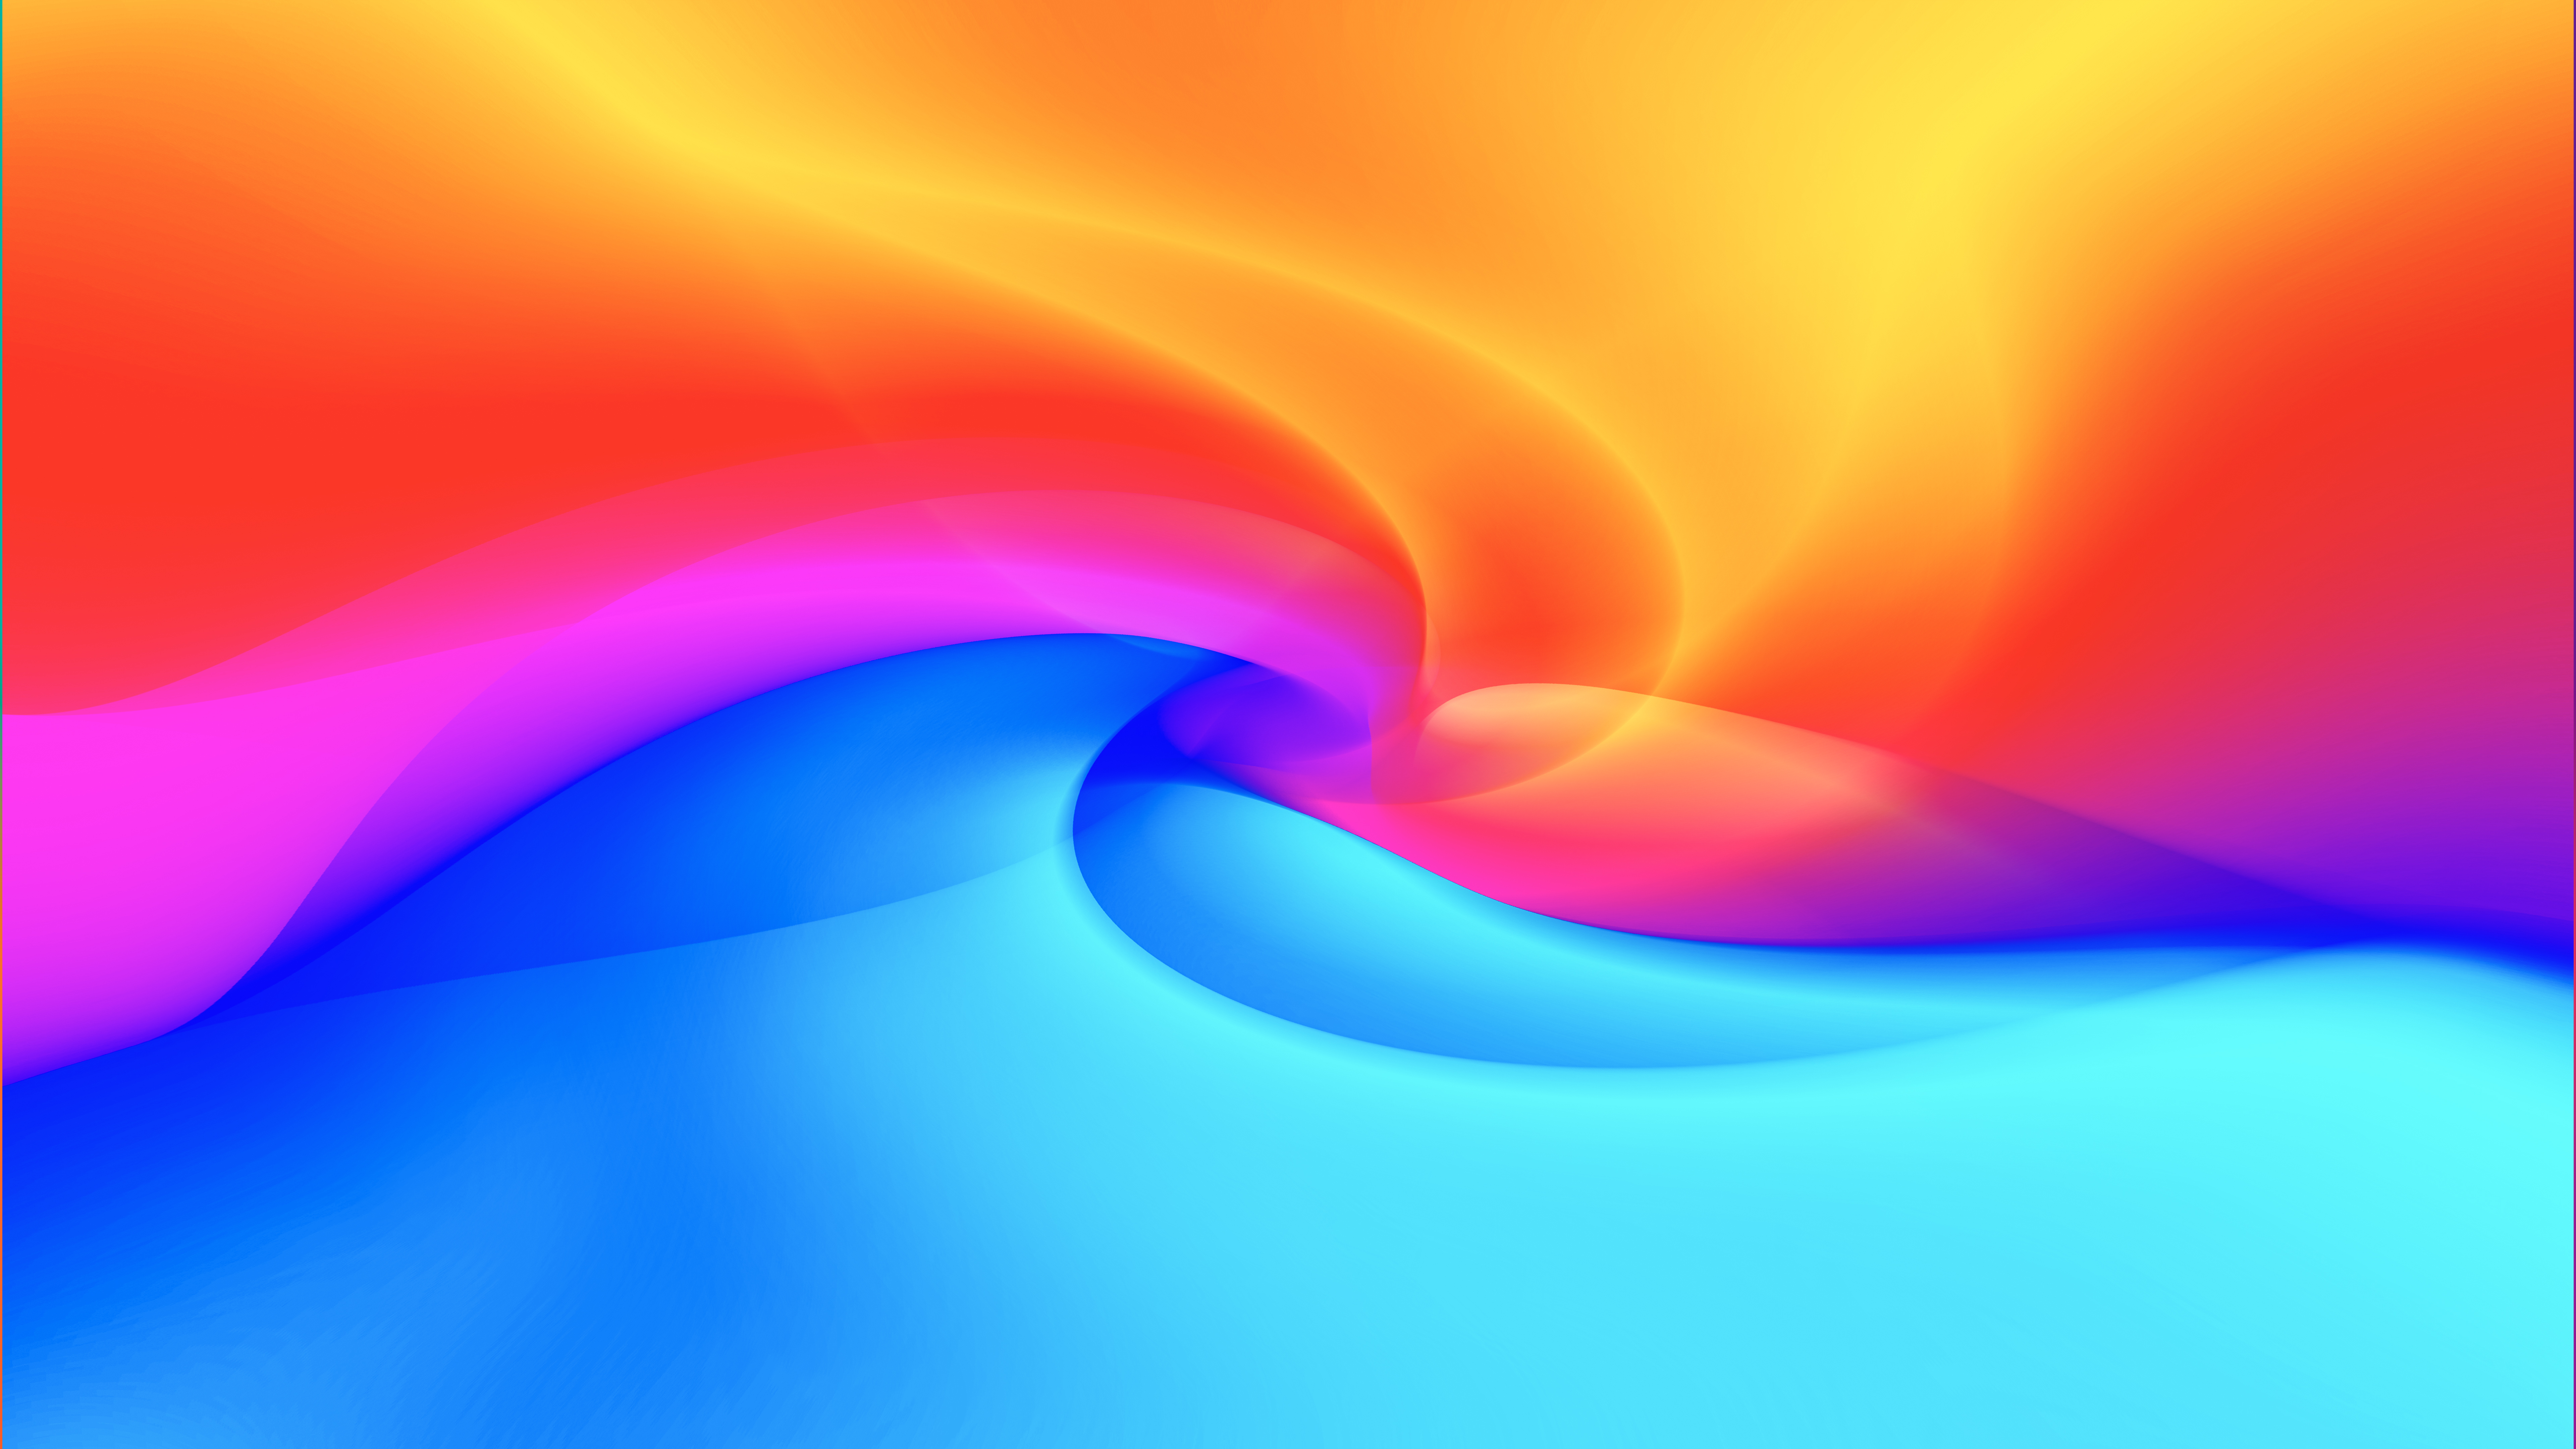 Abstract Colorful Digital Background For Desktop Wallpaper Backgrounds |  JPG Free Download - Pikbest